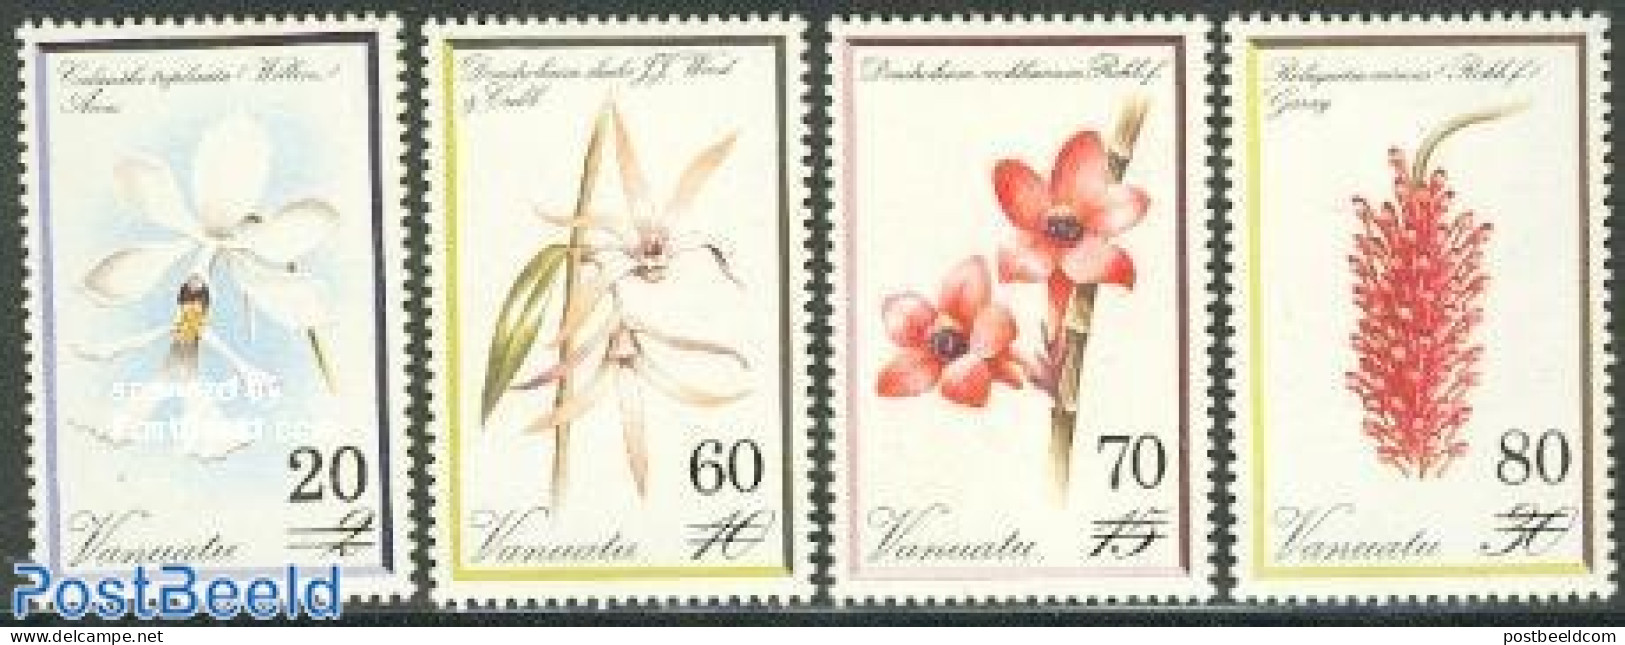 Vanuatu 1991 Orchids, Overprints 4v, Mint NH, Nature - Flowers & Plants - Orchids - Vanuatu (1980-...)